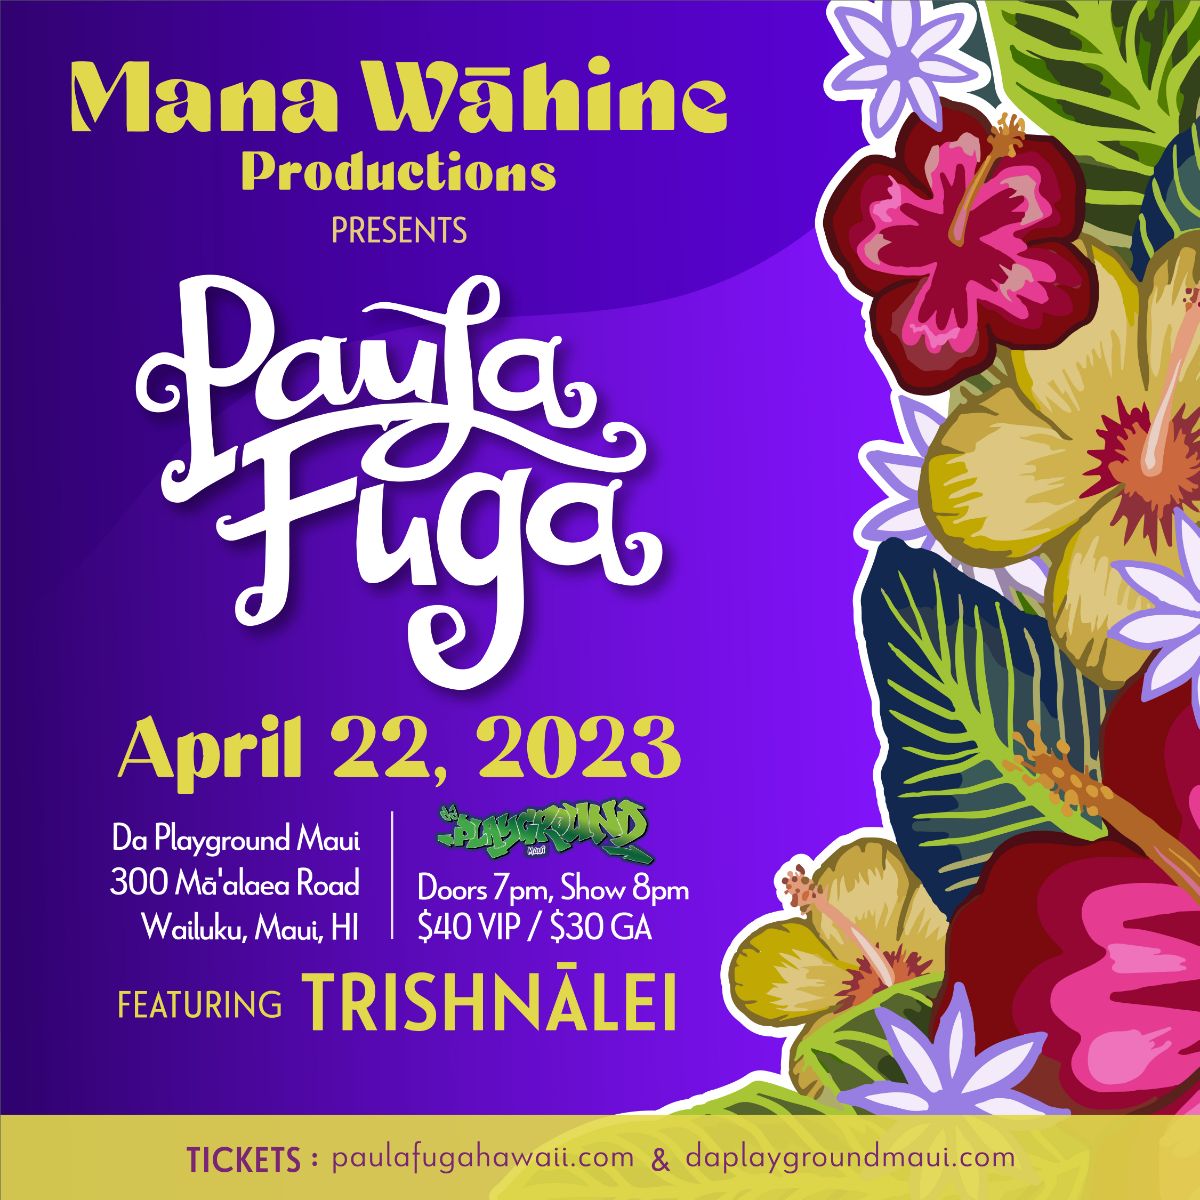 PAULA FUGA with Trishnalei Tickets at da Playground Maui in Wailuku by